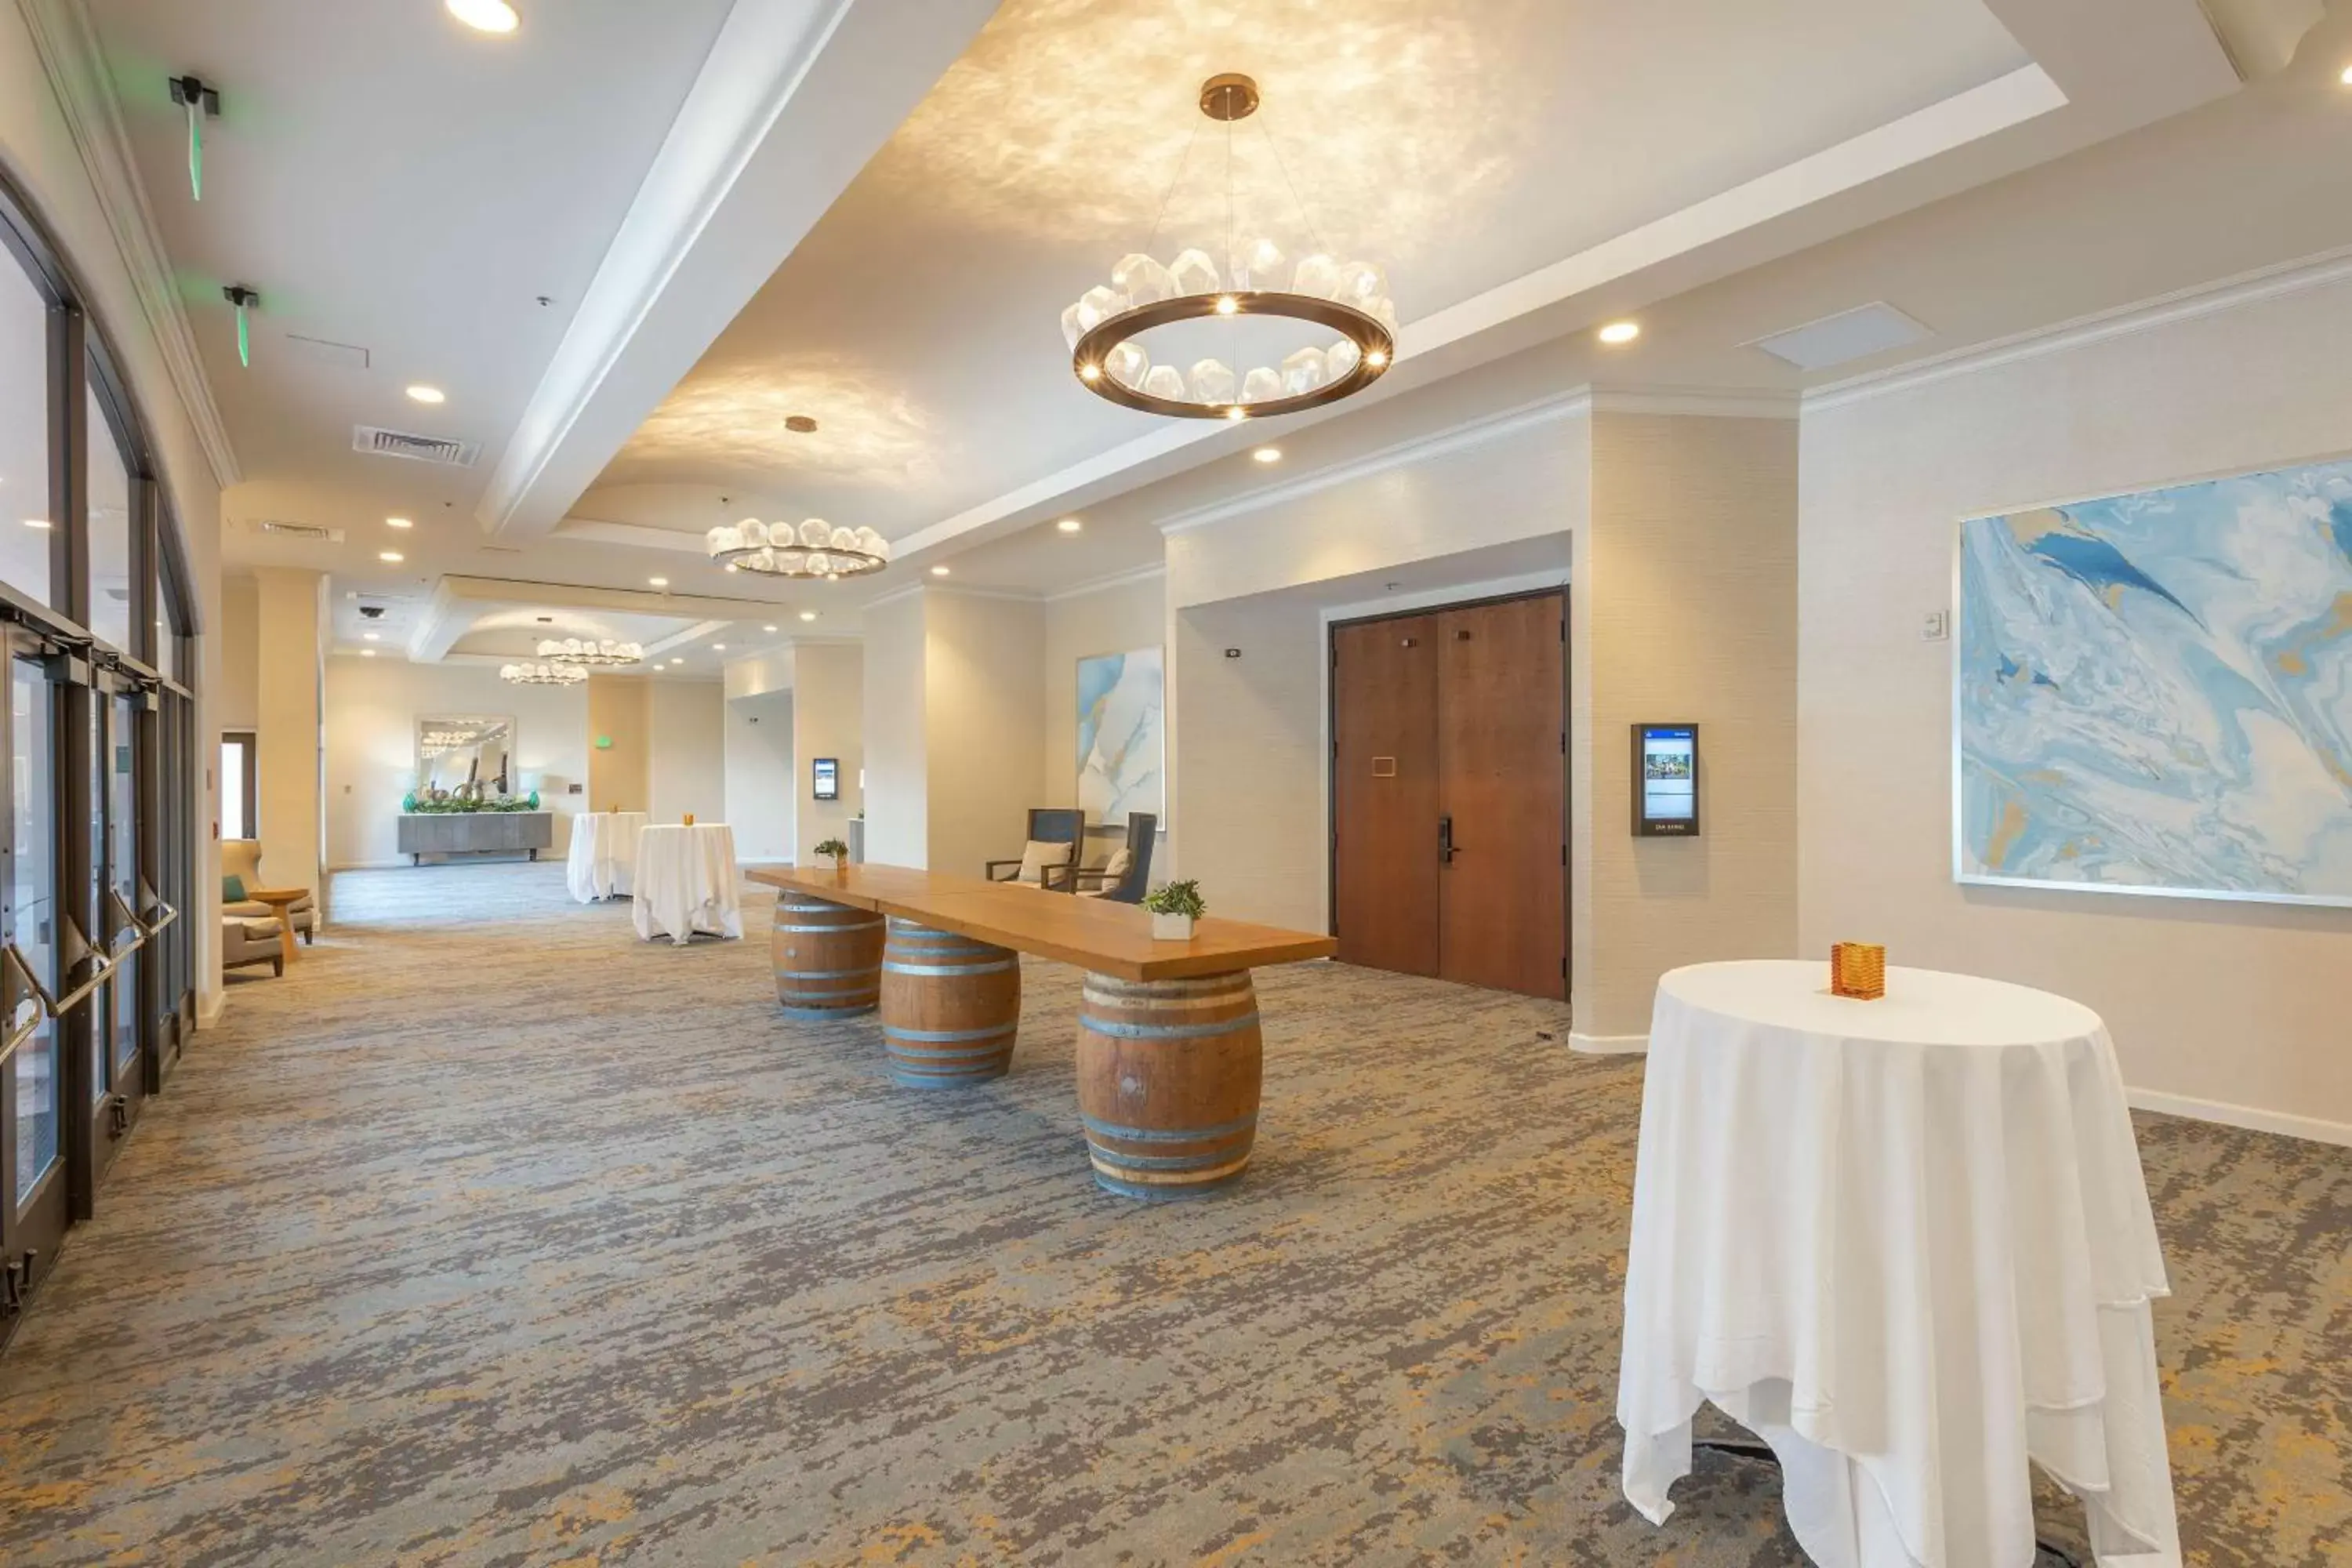 Meeting/conference room in Hilton Santa Barbara Beachfront Resort